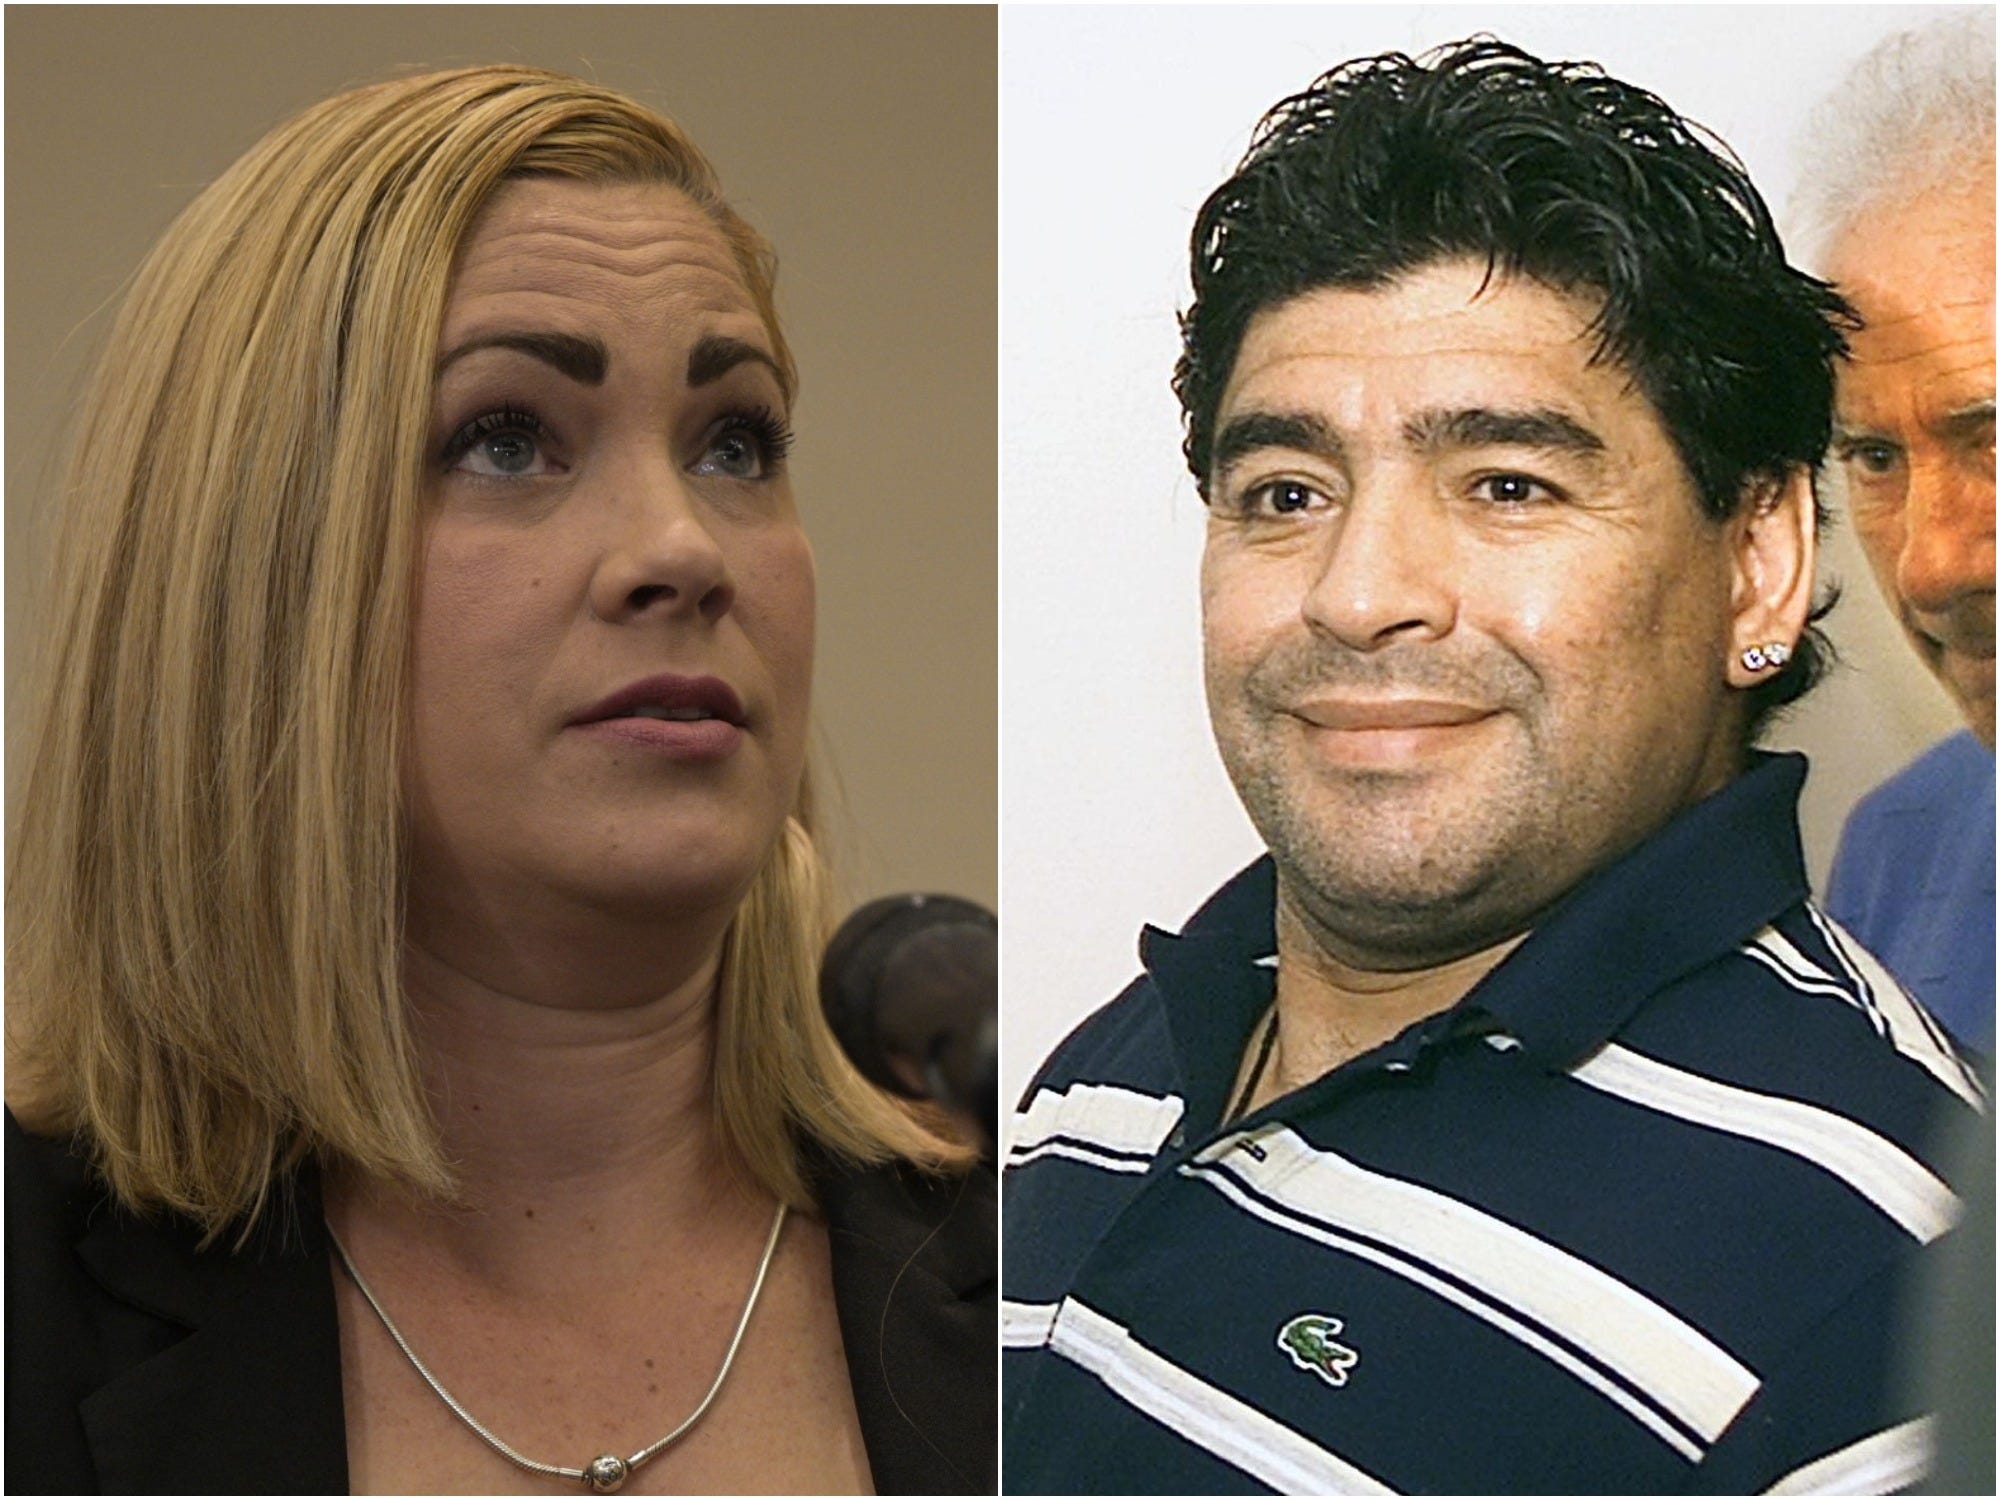 A side by side image shows Mavys Alvarez in November 2021 and Diego Maradona in January 2000.